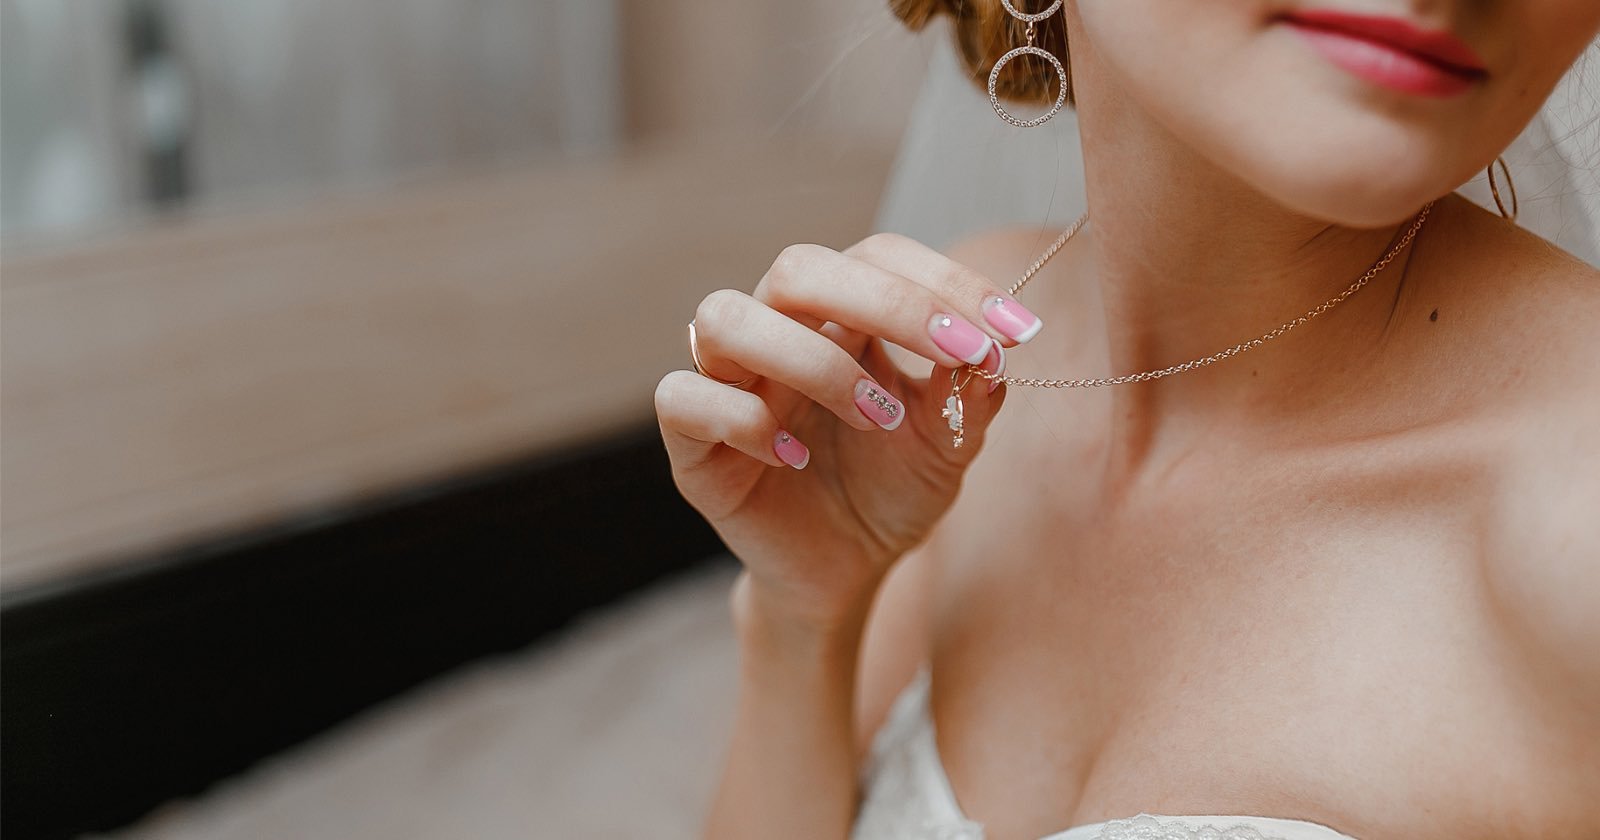 Wedding Photographer Reveals Hack So Brides Necklace Stays Put in Photos